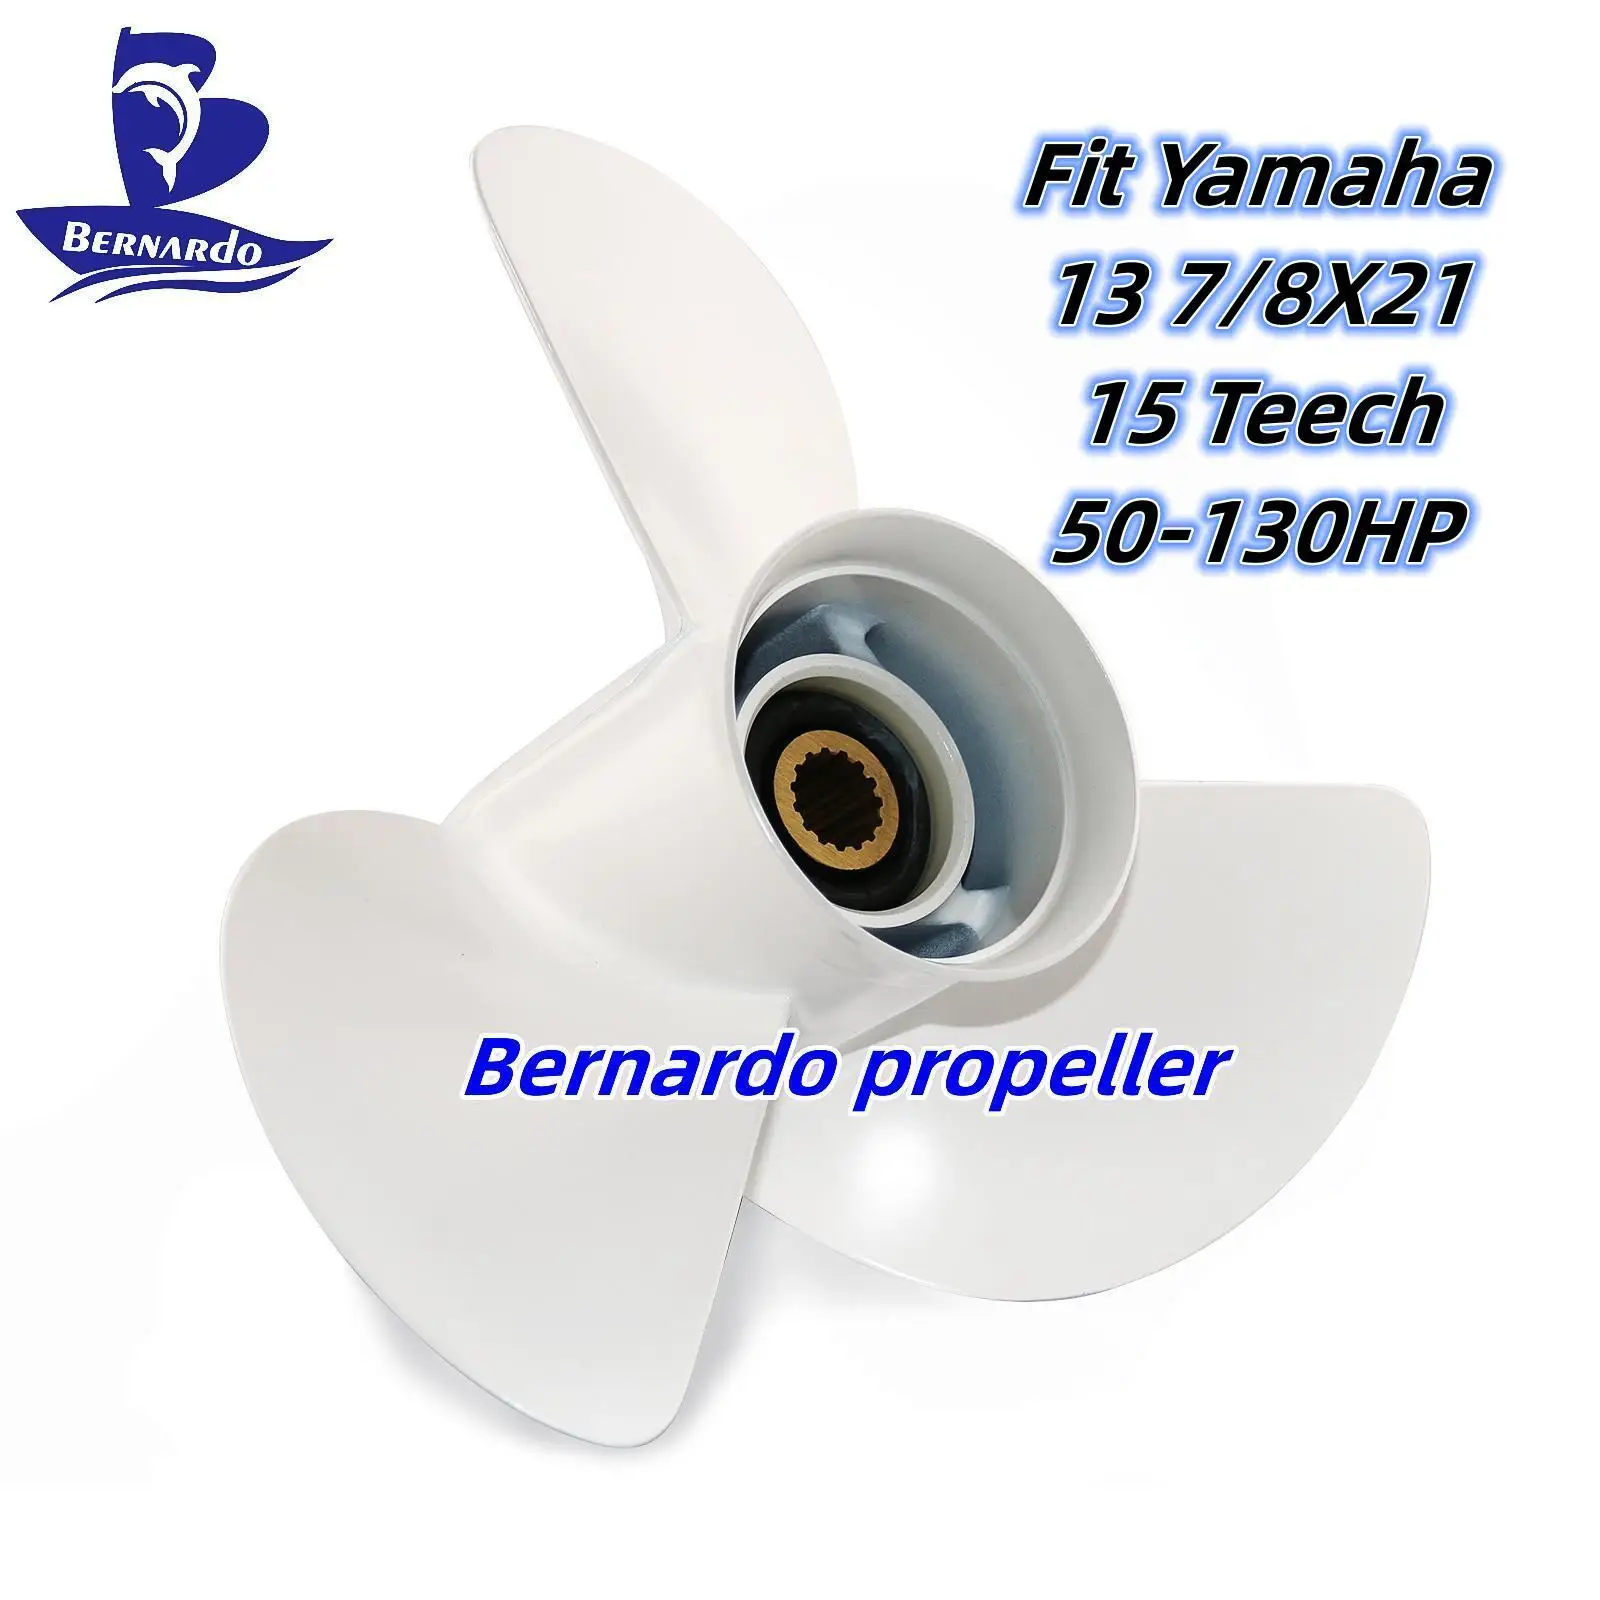 Bernardo Boat Propeller 13 7/8X21 Fit Yamaha Outboard Engine 50 60 70 80 90 100 115 130HP Aluminum Alloy 3 Blade 15 Tooth Spline бинокль konus next 2 8x21